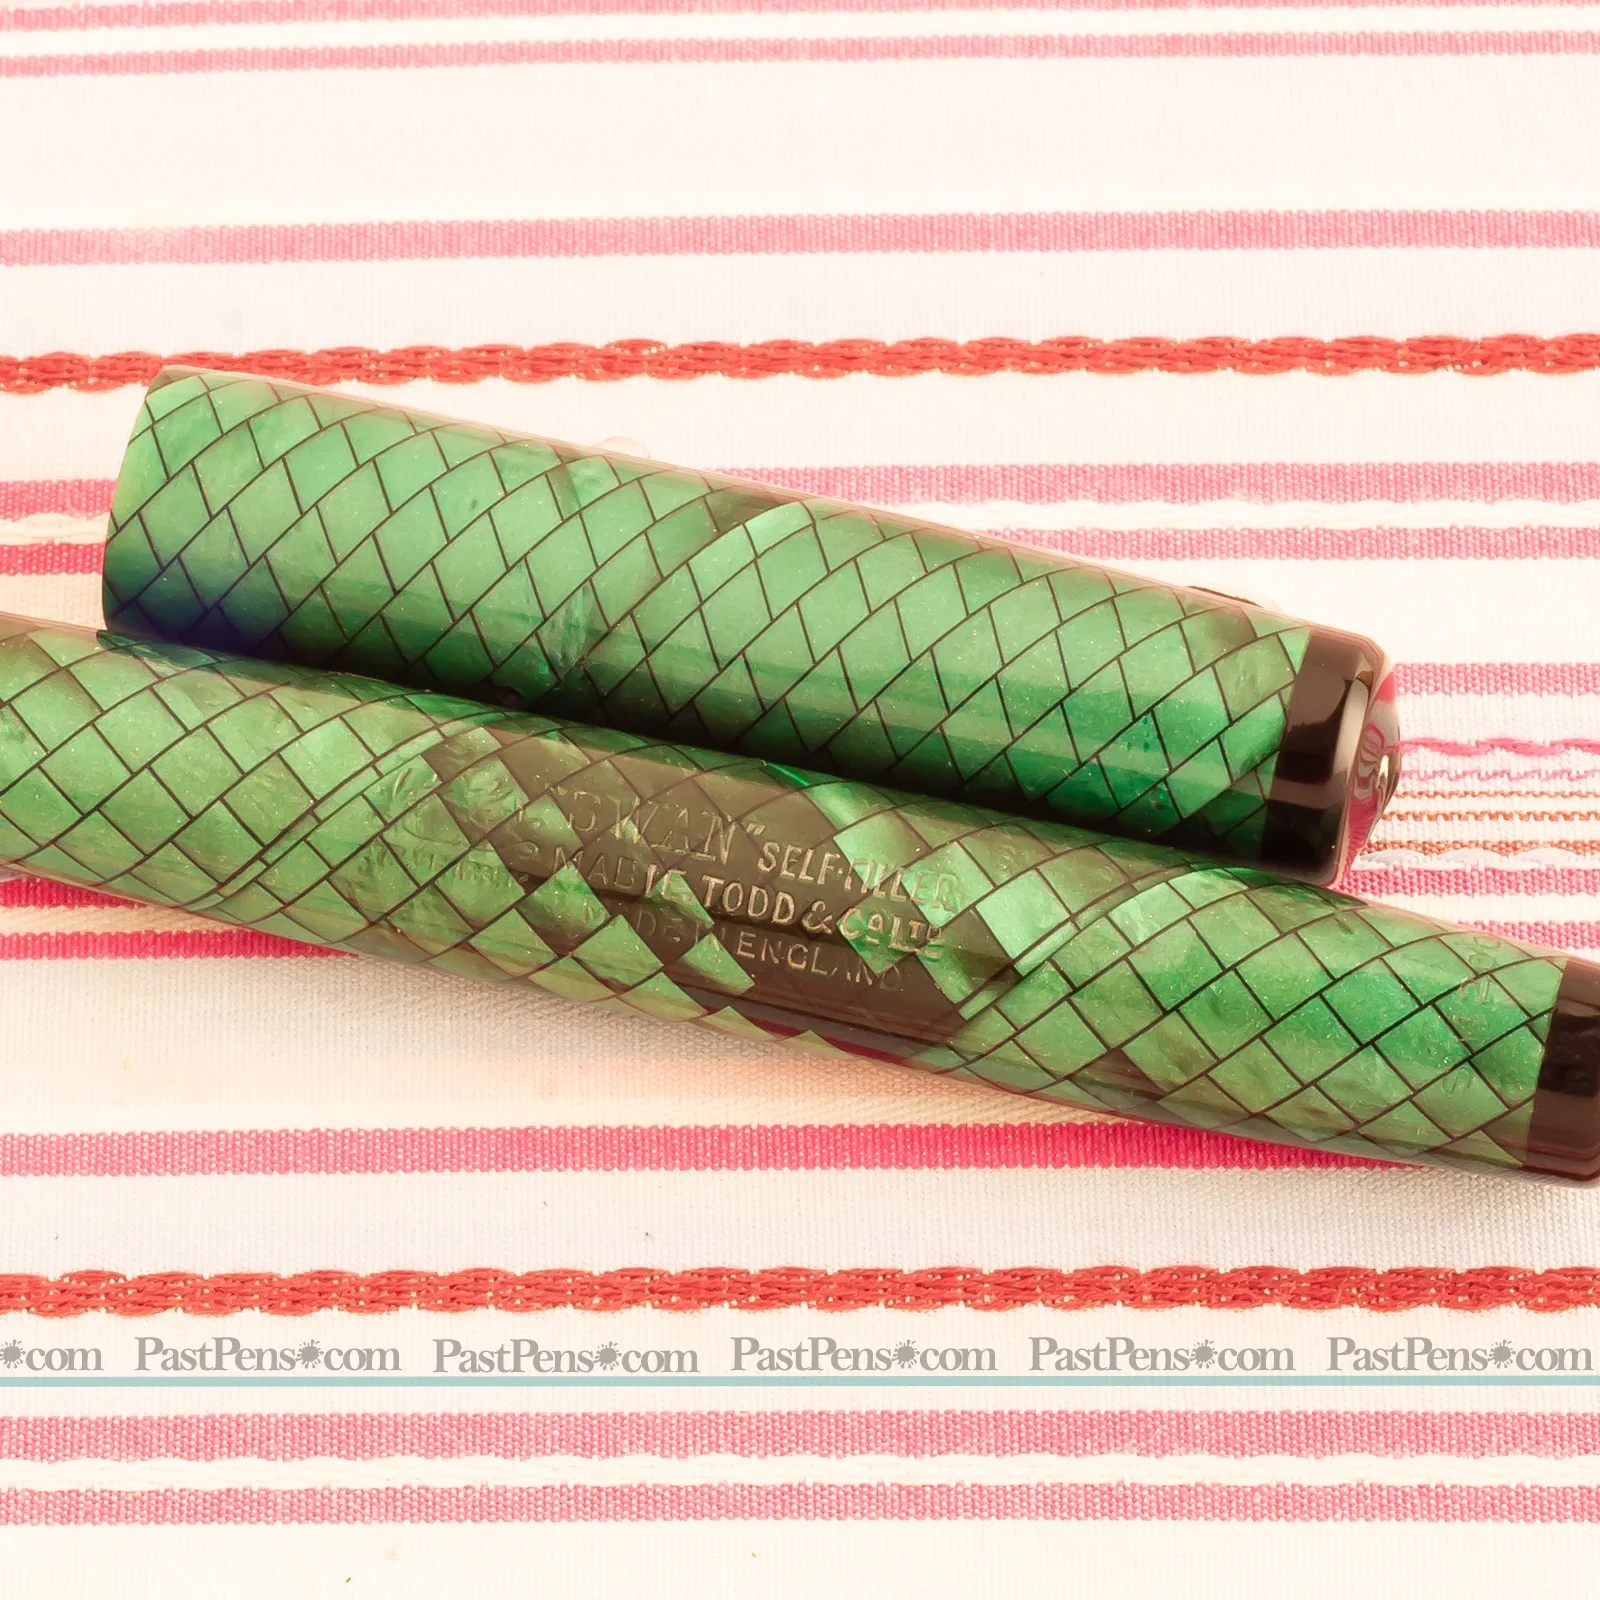 mabie todd swan self filler snakeskin lizard green fountain pen